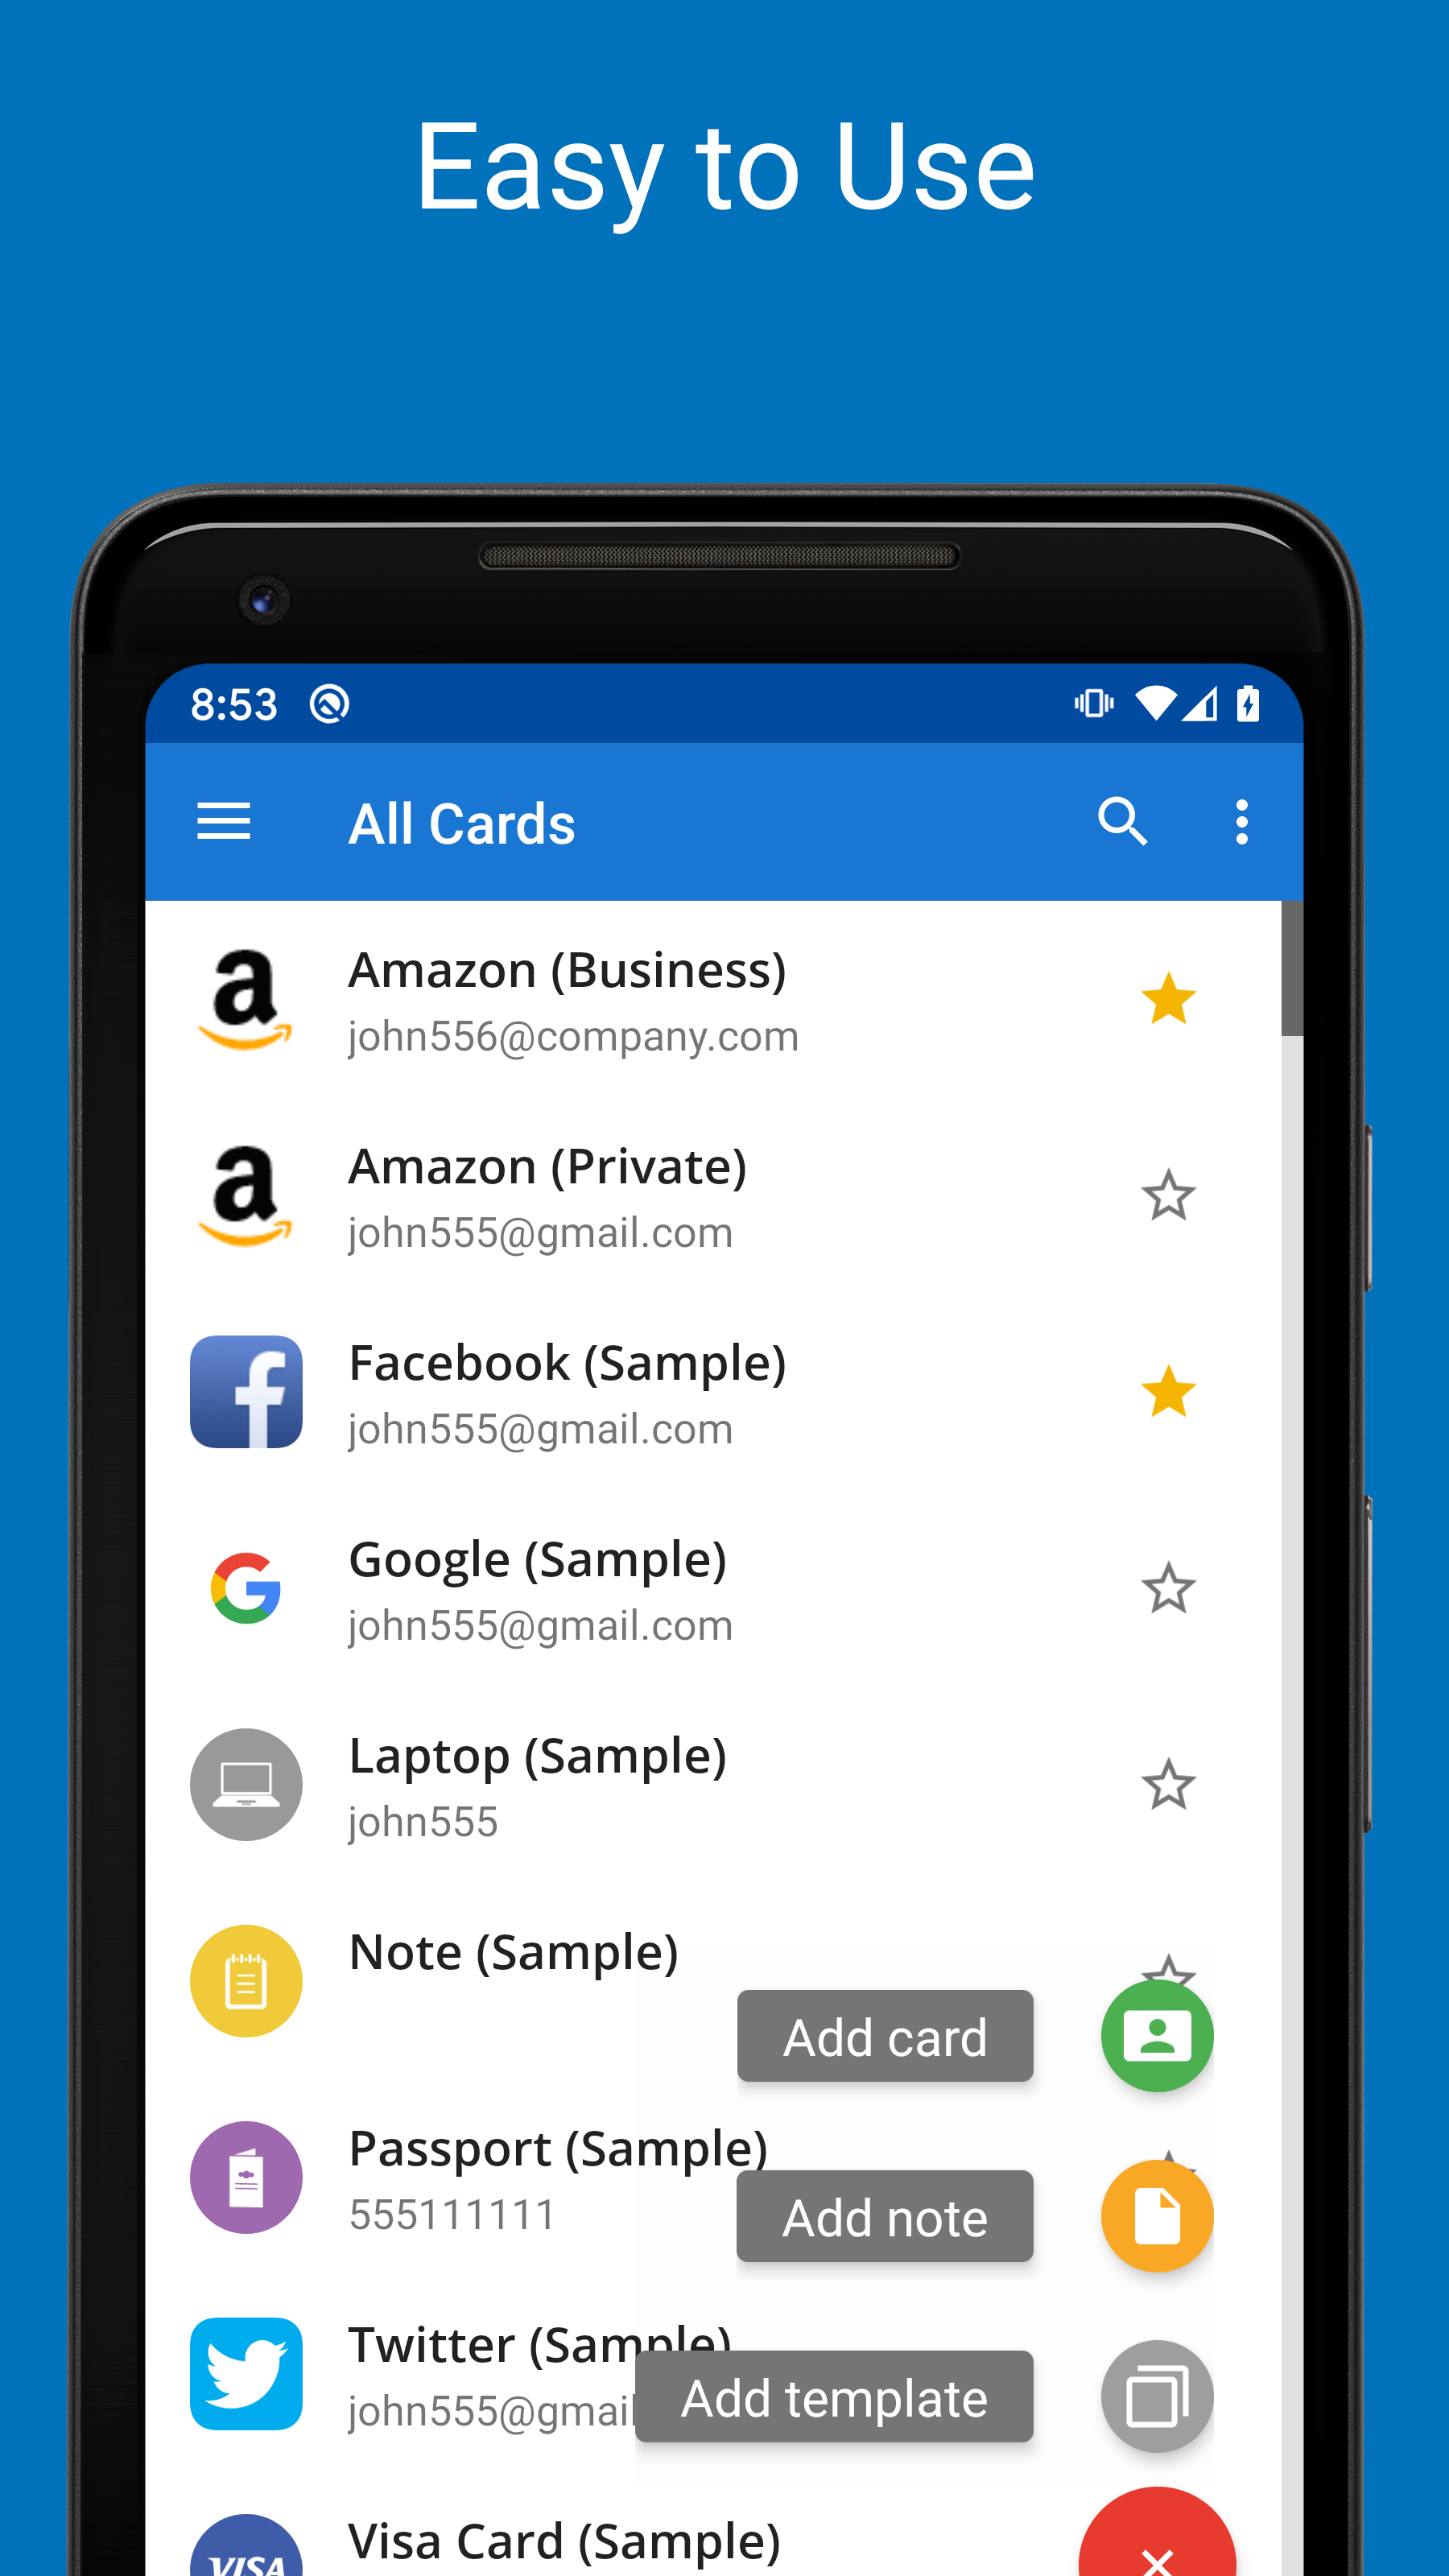 Android application Password Manager SafeInCloud ℗ screenshort